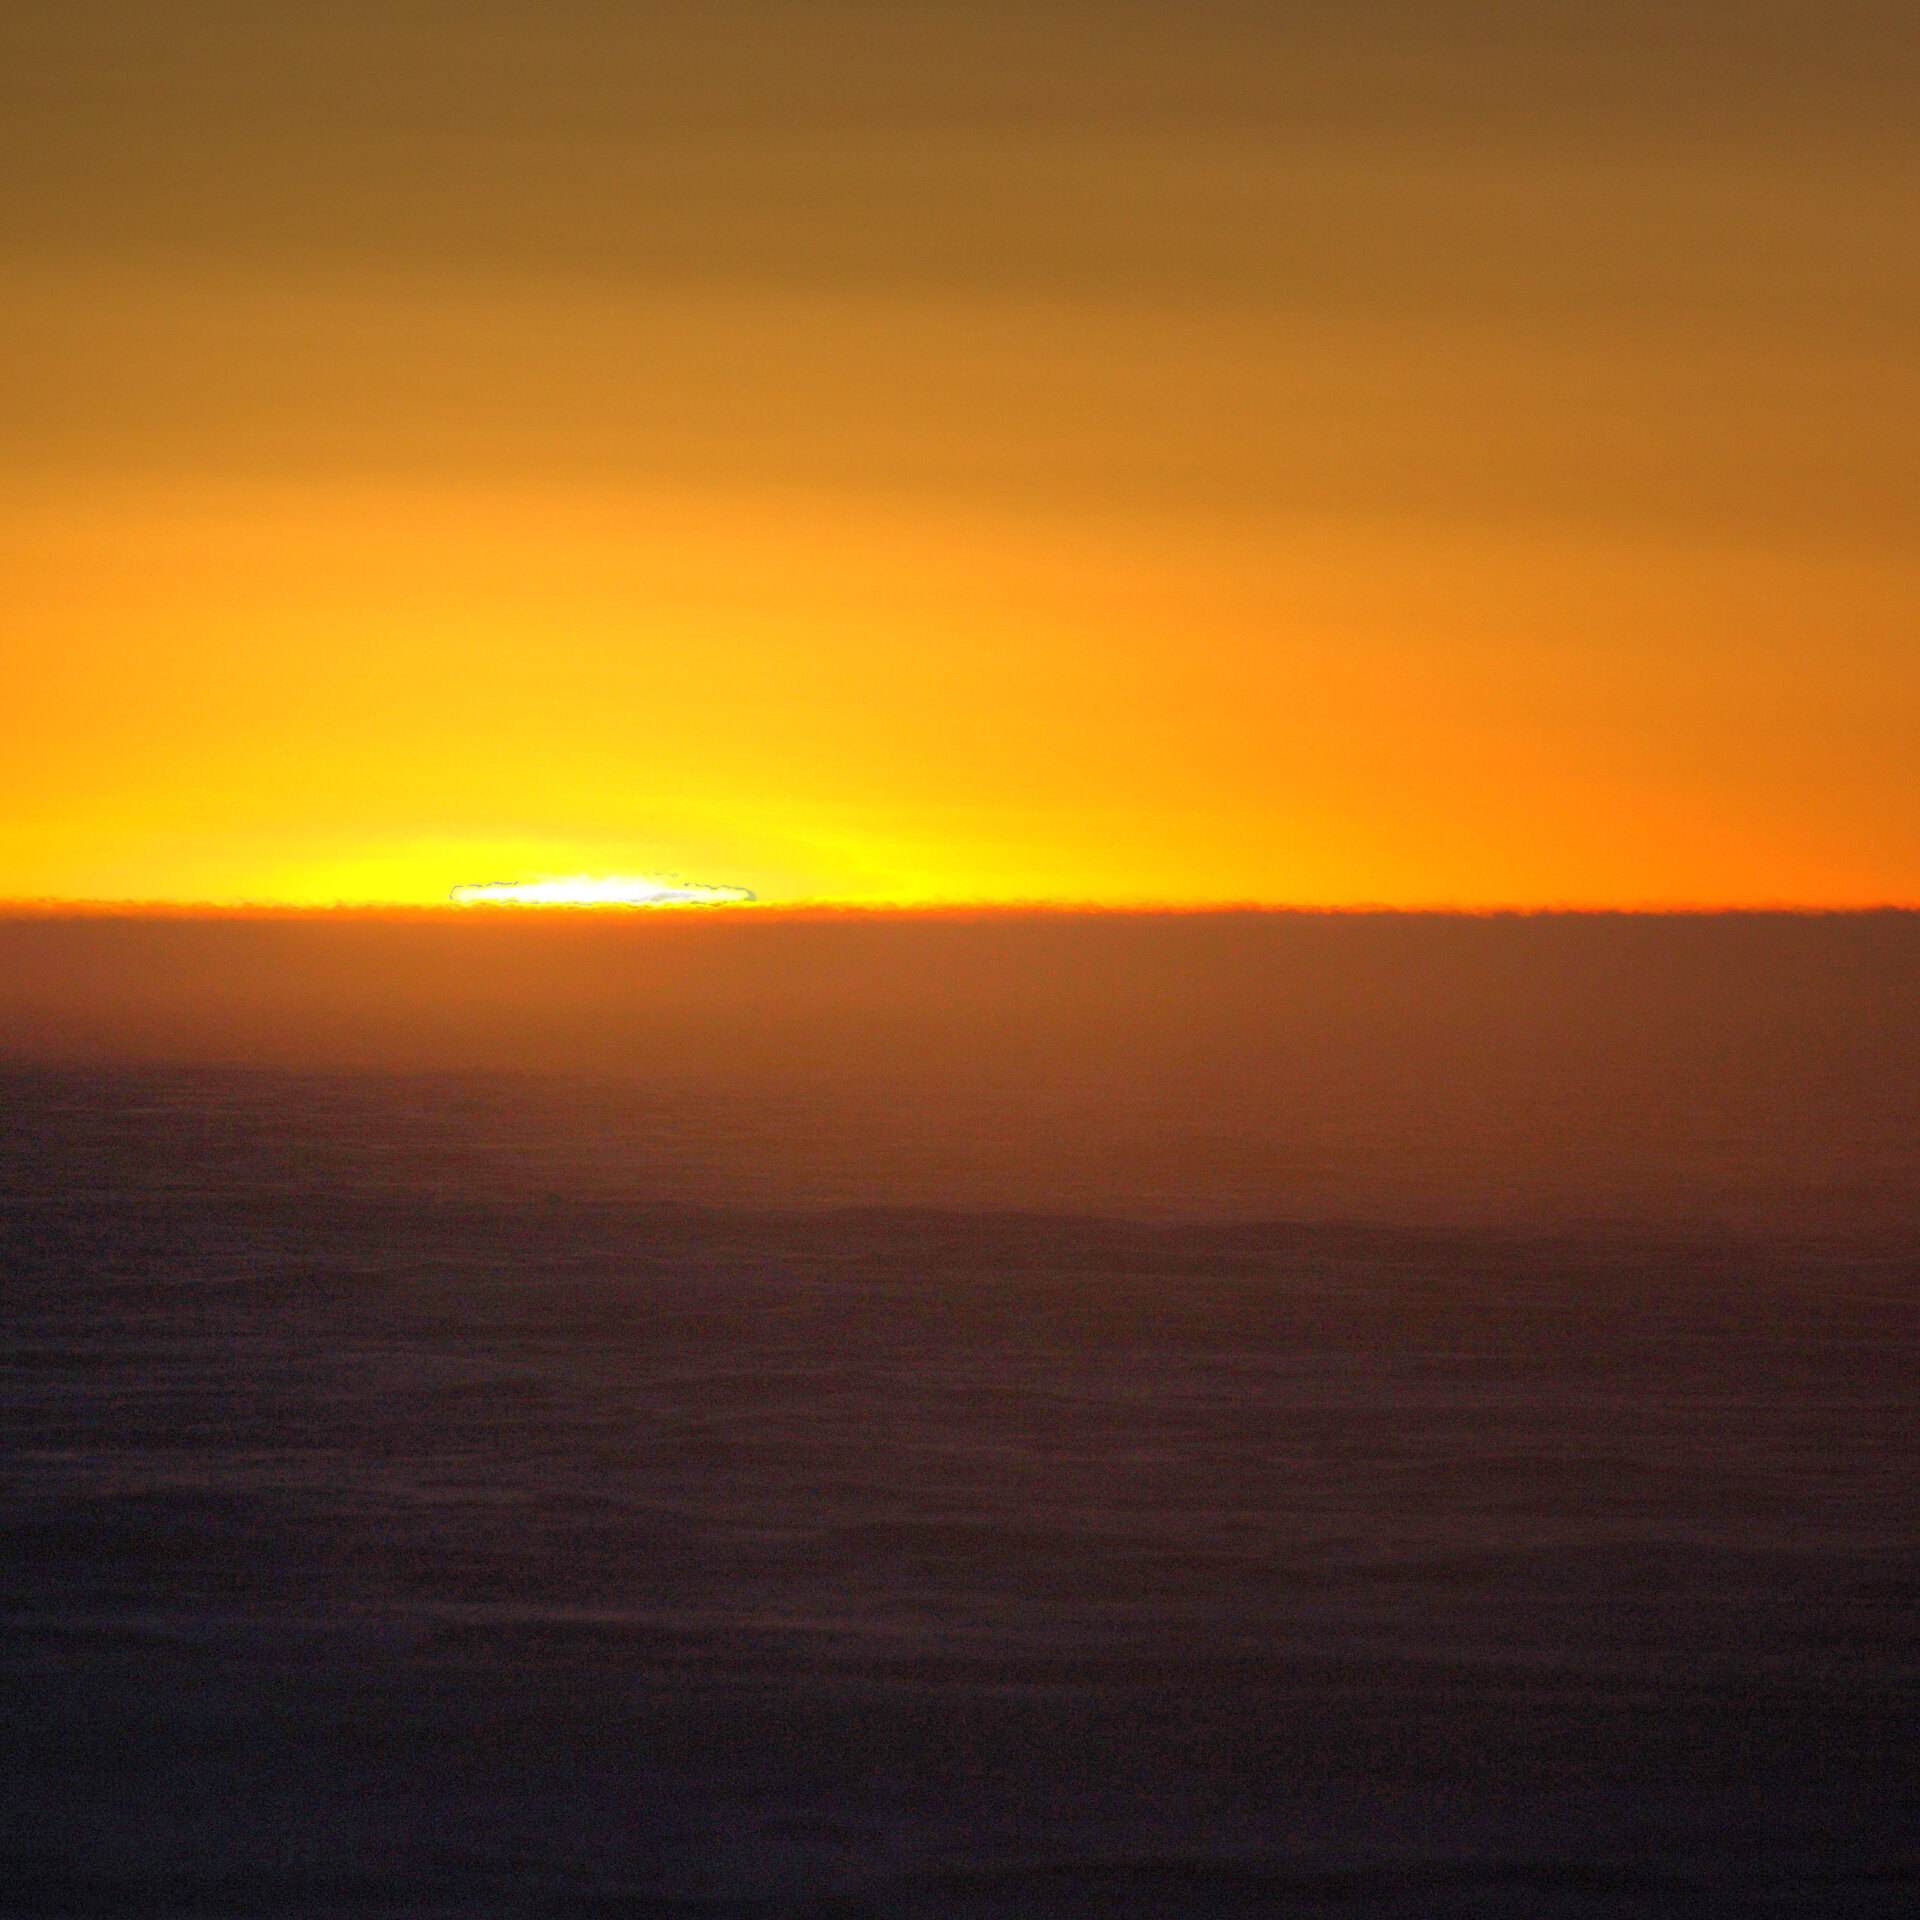 First sunrise at Concordia